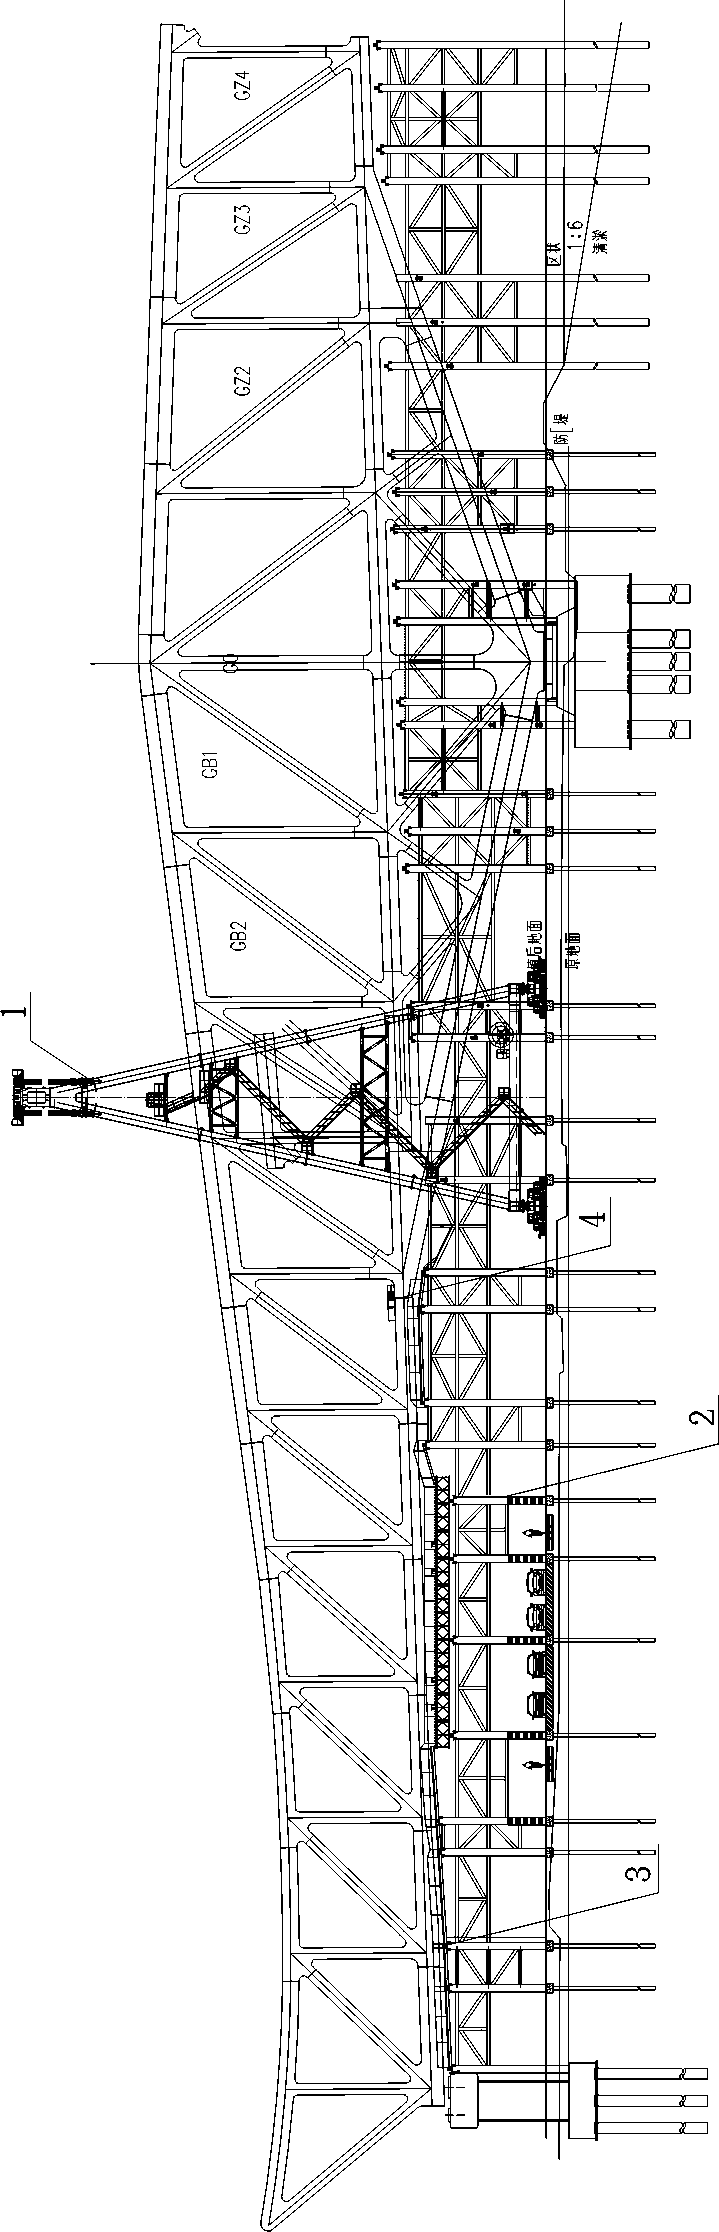 Continuous steel truss bridge side span rapid closure construction system and construction method